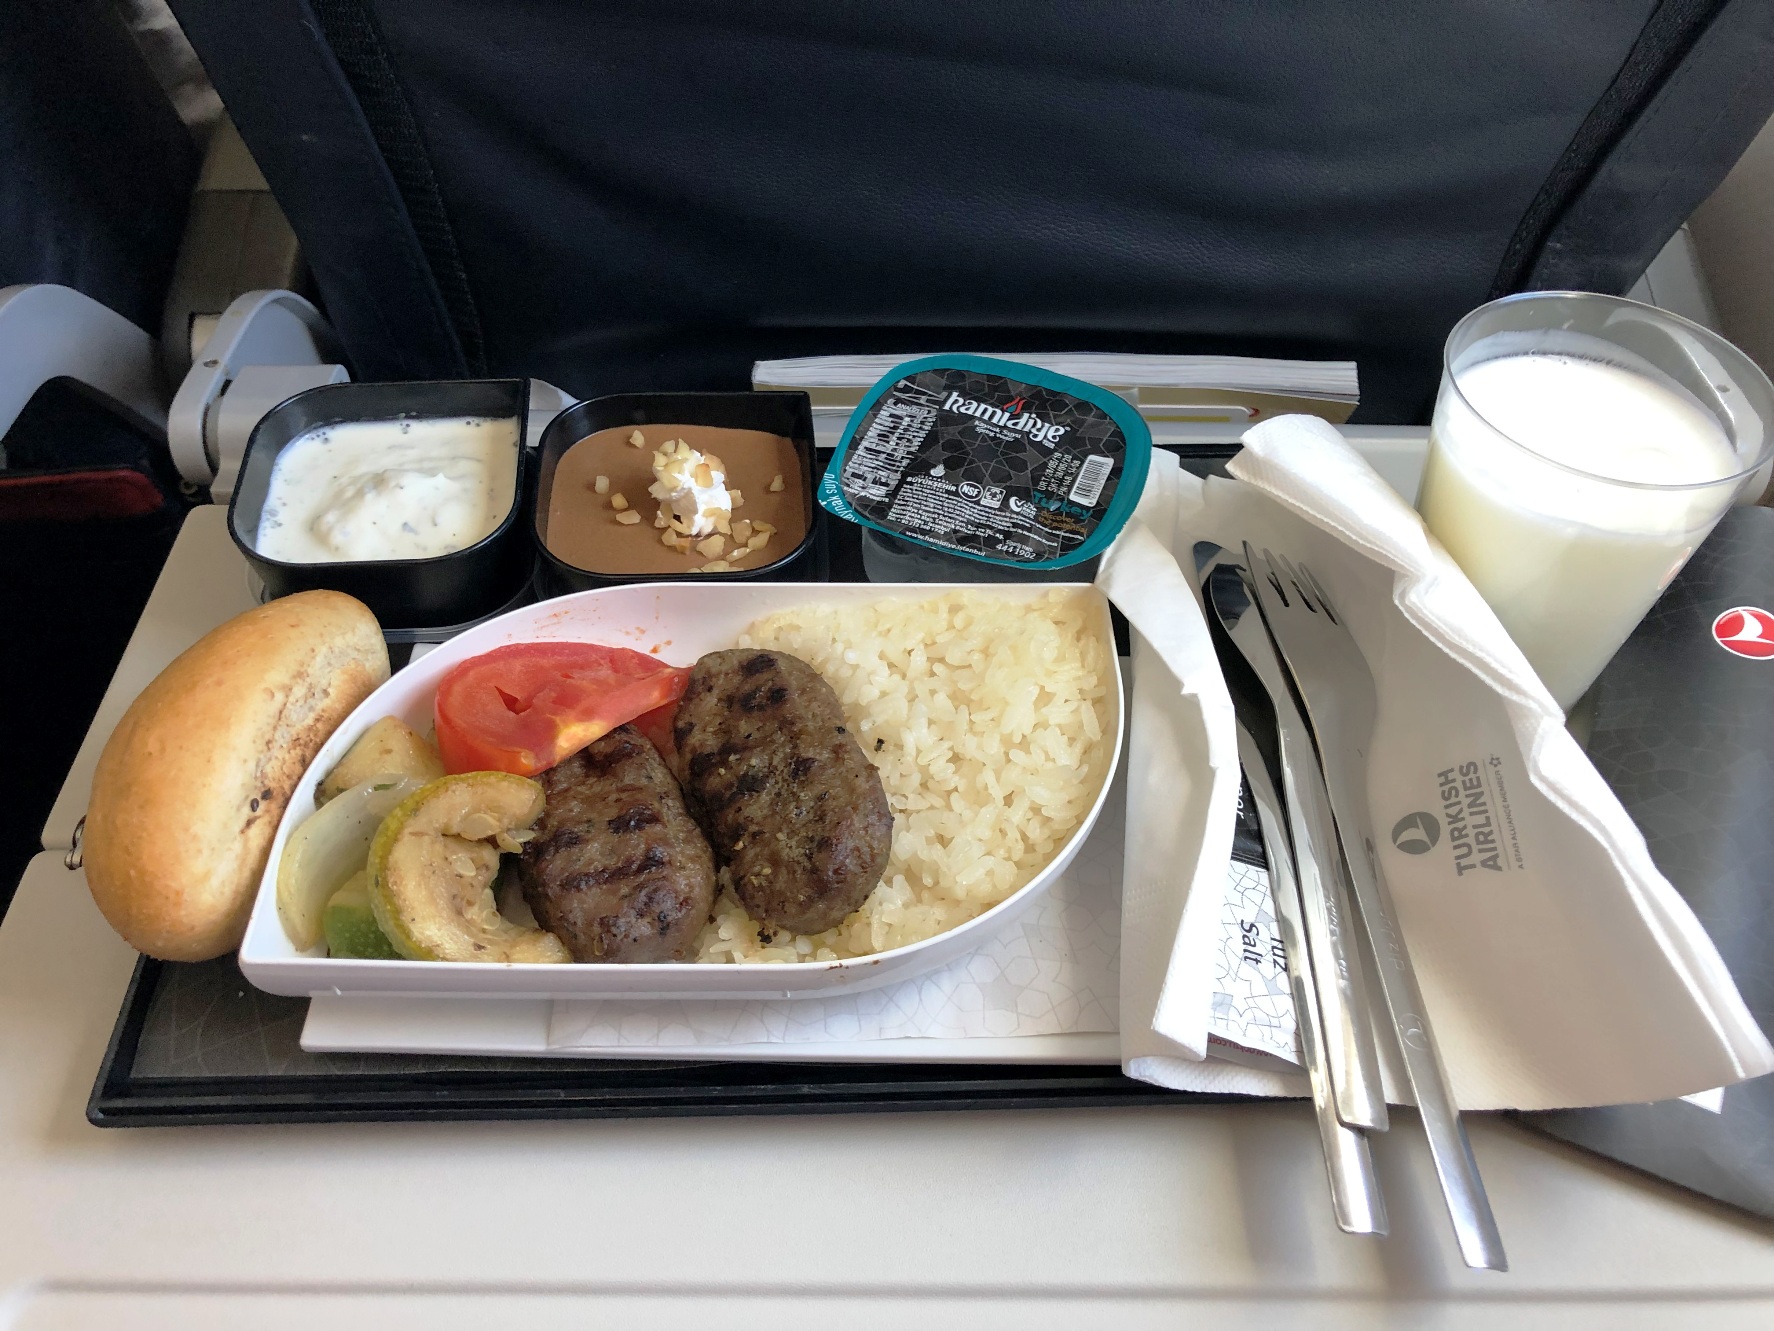 Turkish Airlines Inflight Meal (Istanbul-Stuttgart)